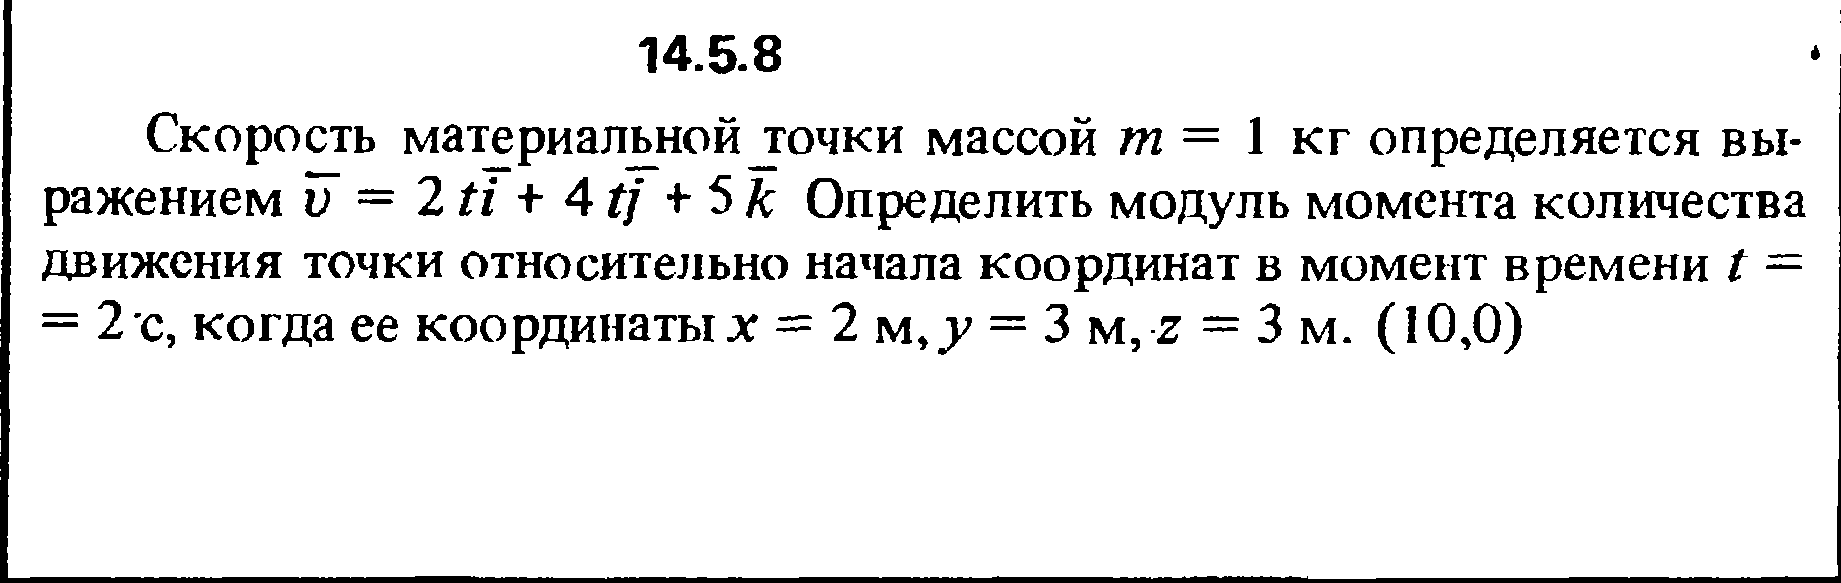 Решение задачи 14.5.8 из сборника Кепе О.Е. 1989 года